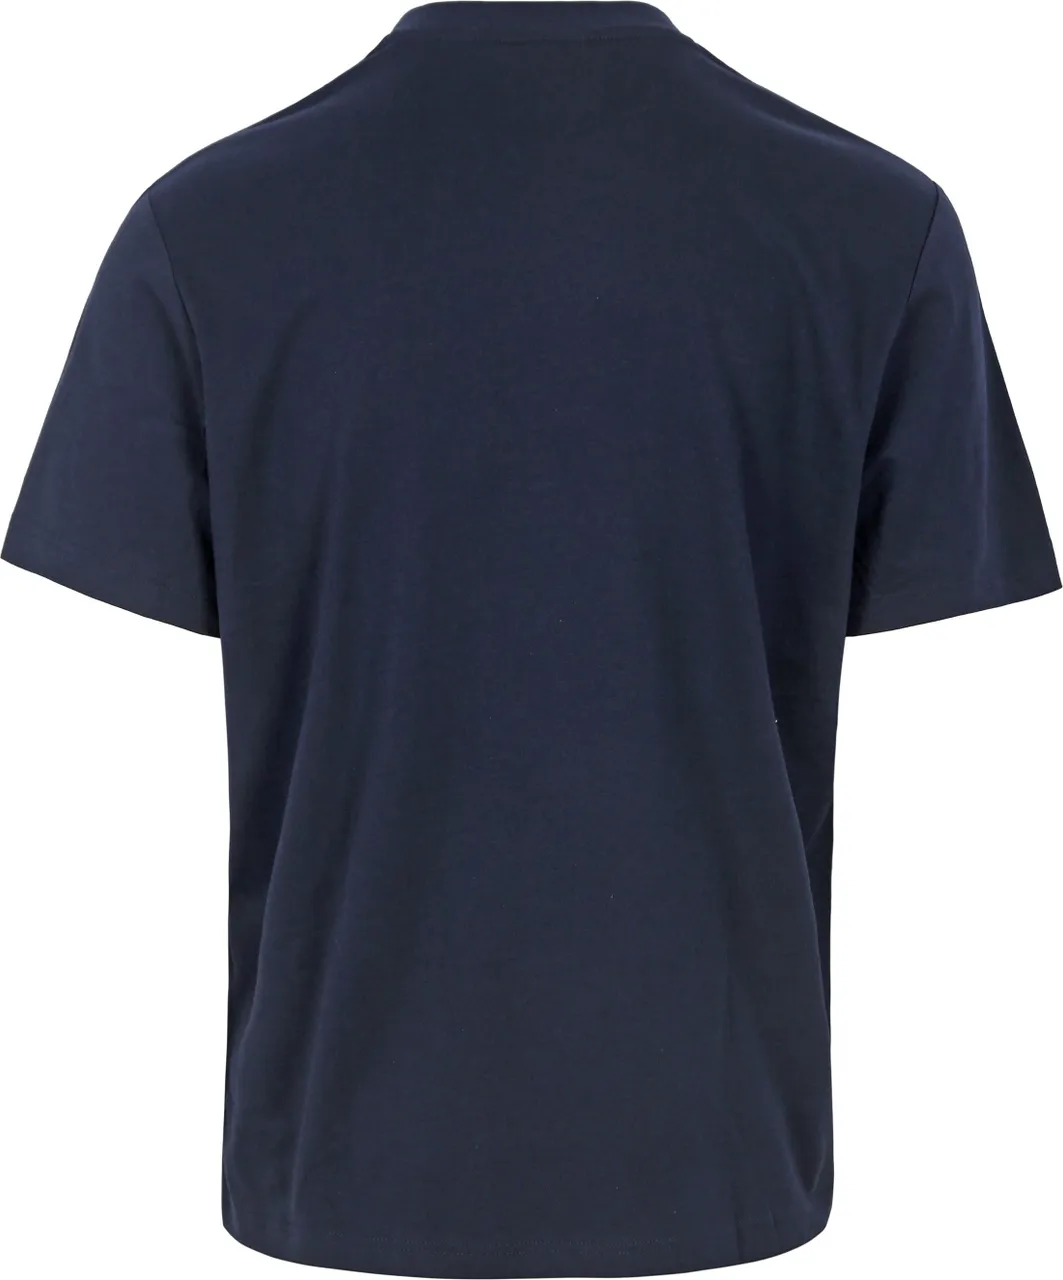 Lacoste T-Shirt Navy Blue Dark Blue